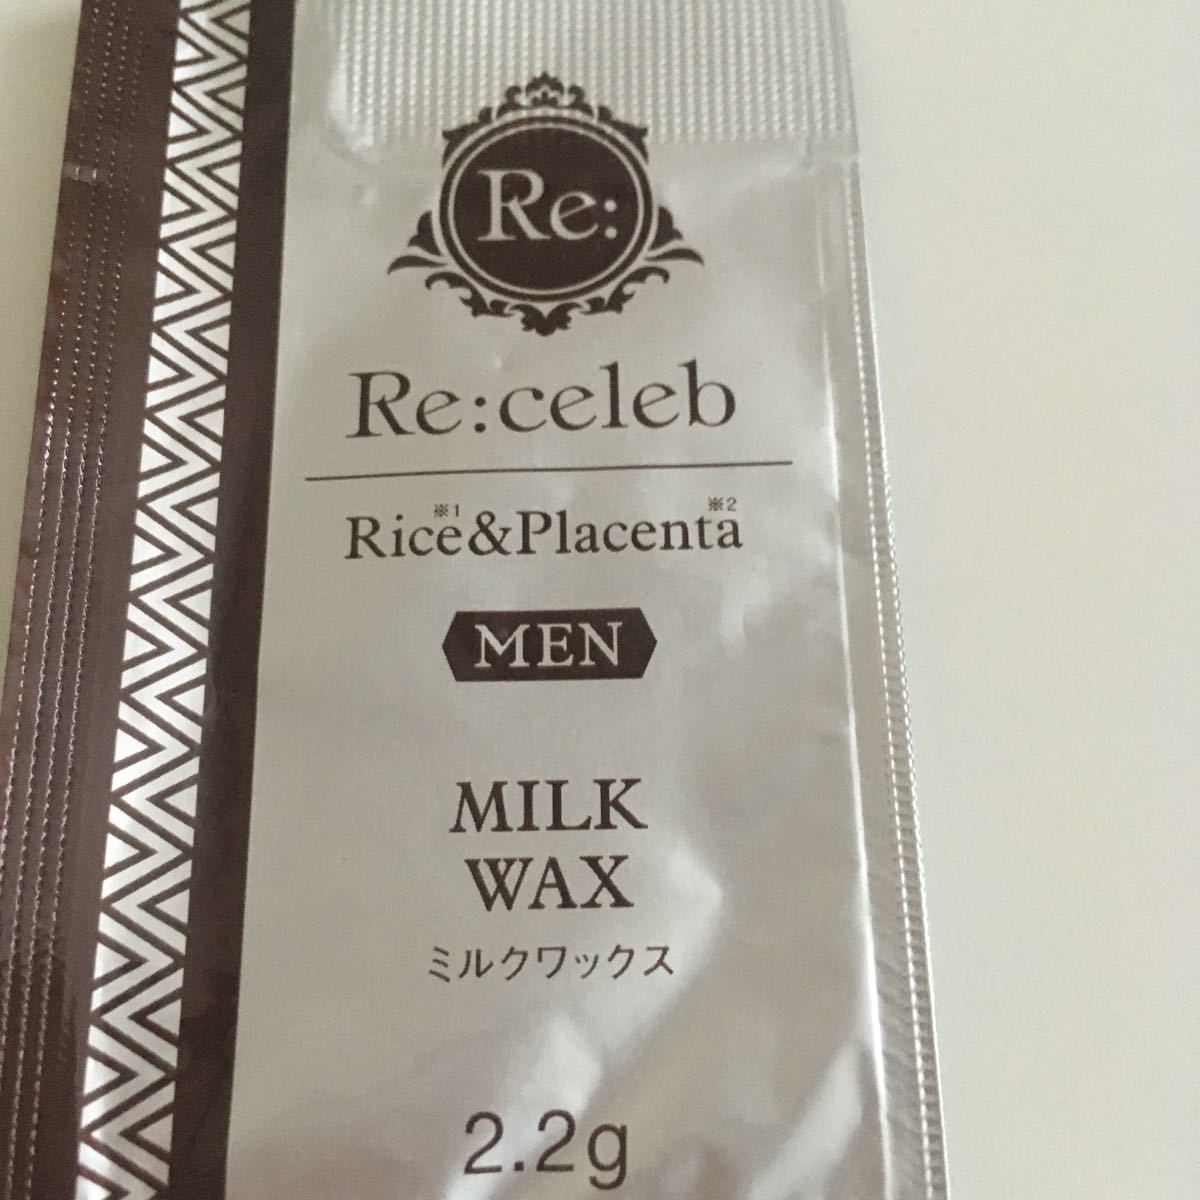  men's styling charge li Celeb men milk wax MW 9 piece set together hotel amenity -